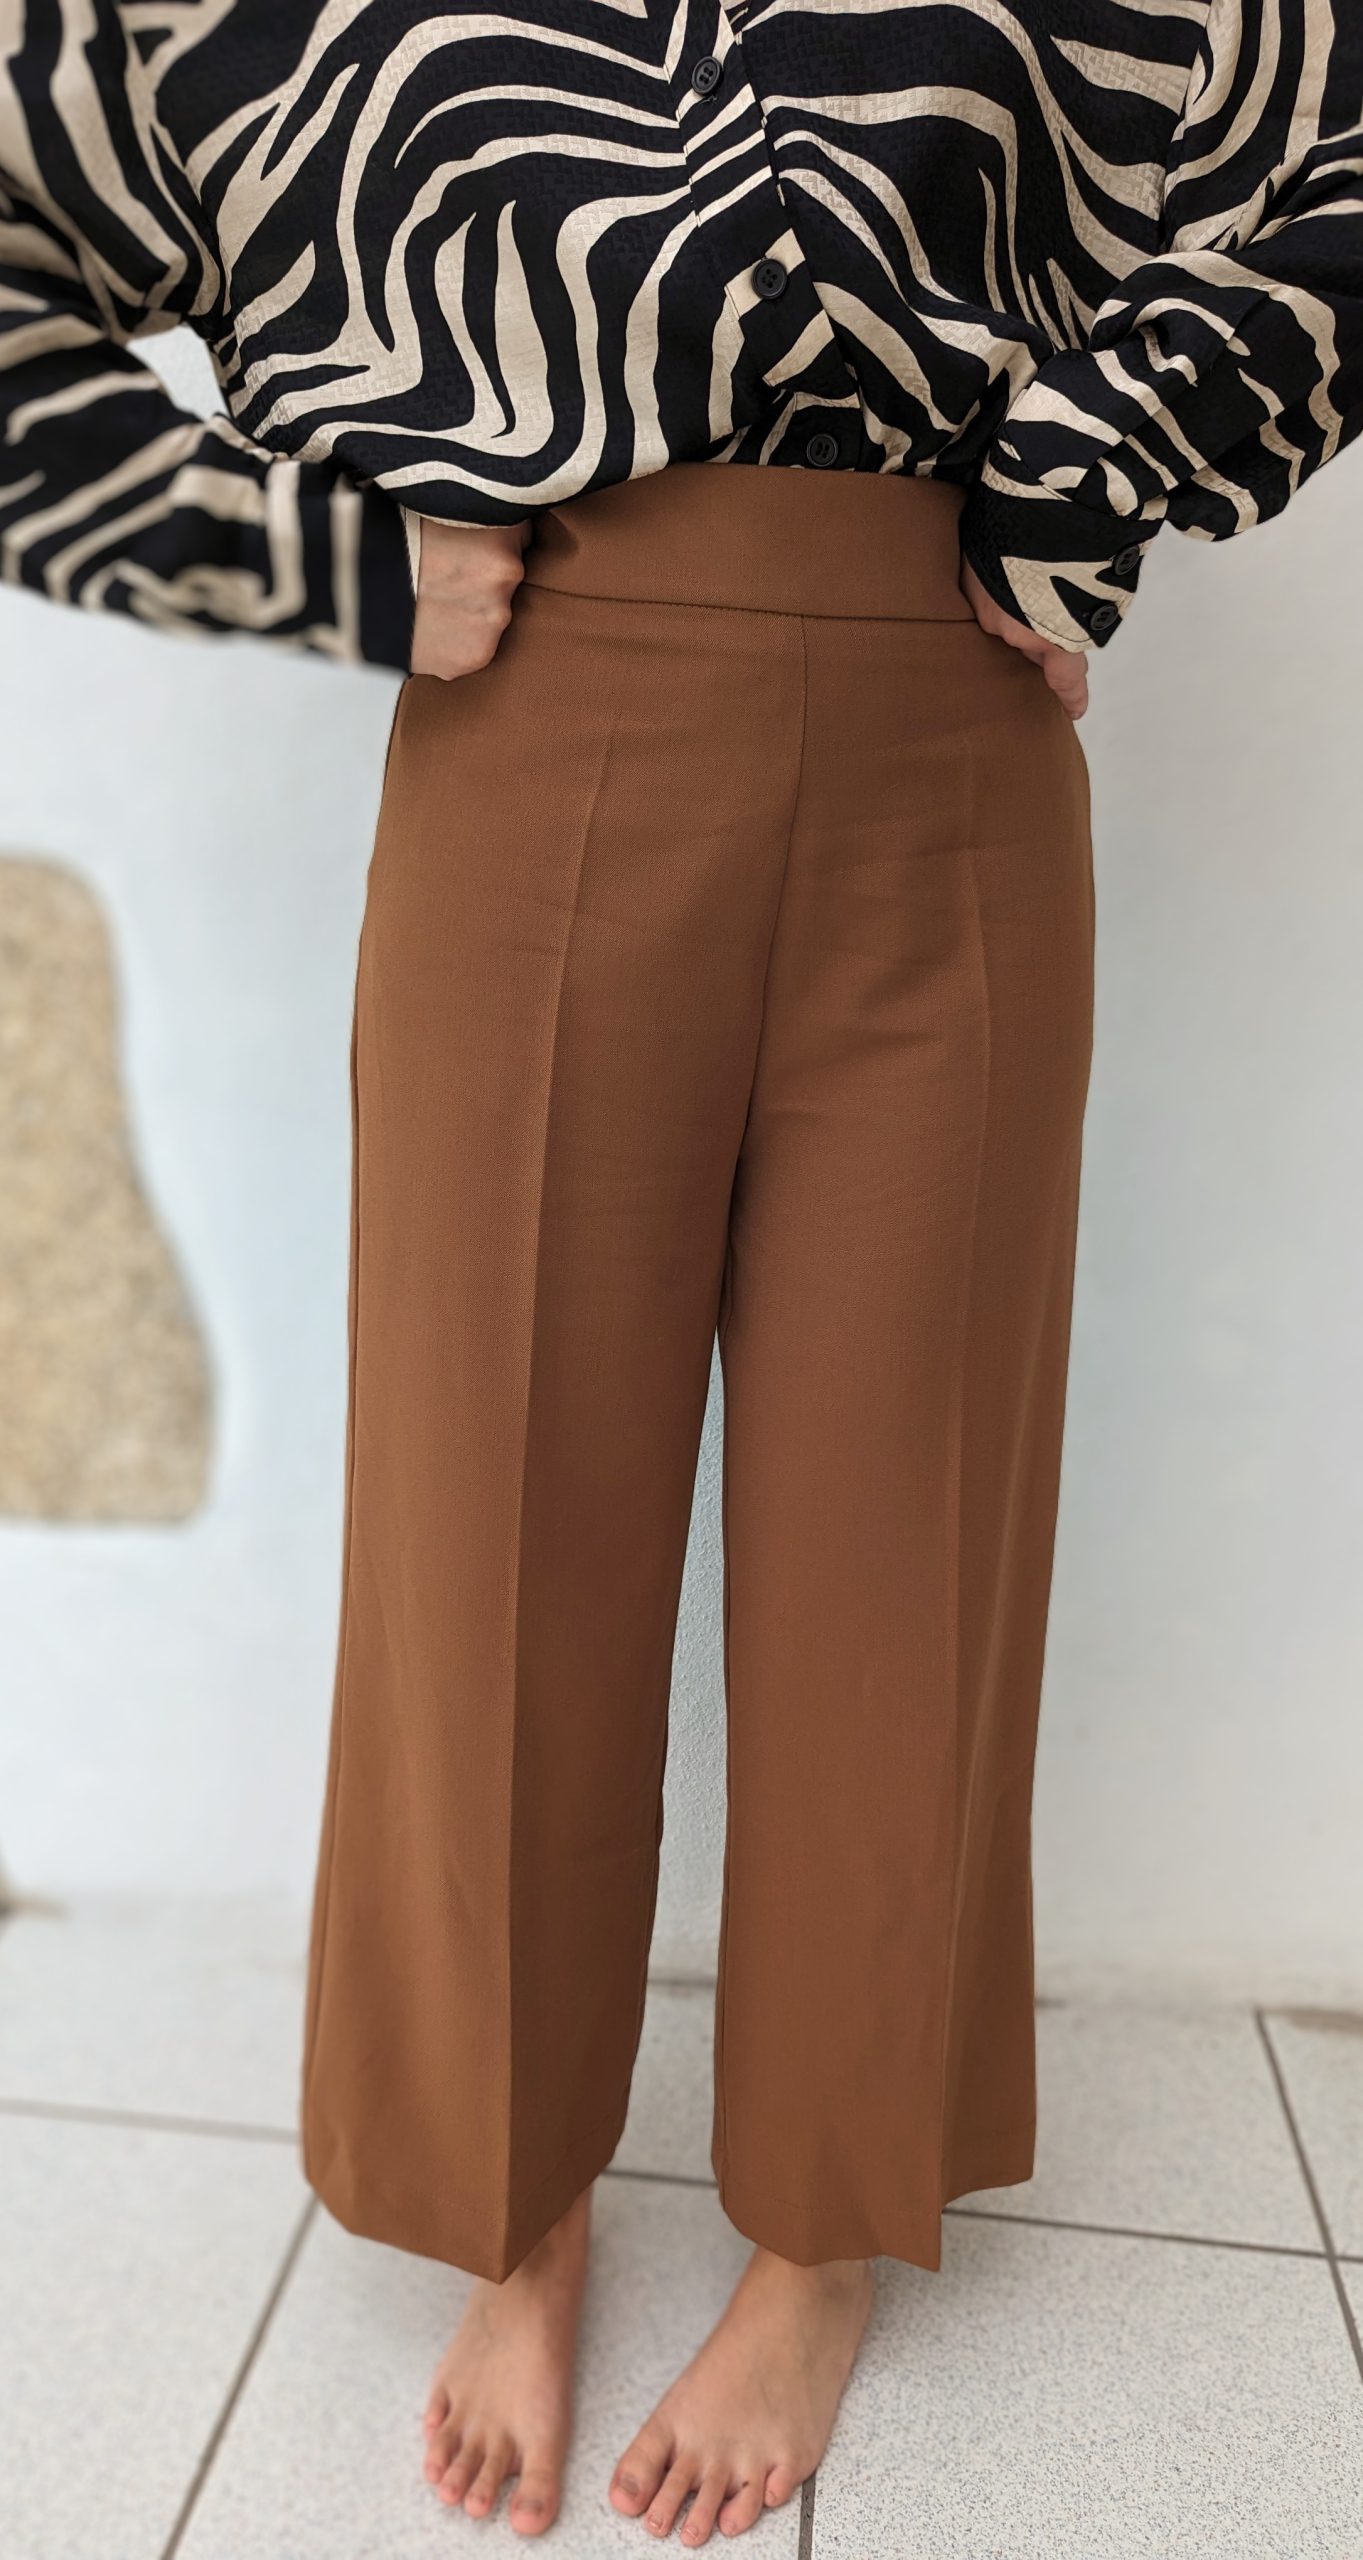 pantalon mathéo camel marque hyppocampe tailleur orange fabrication française